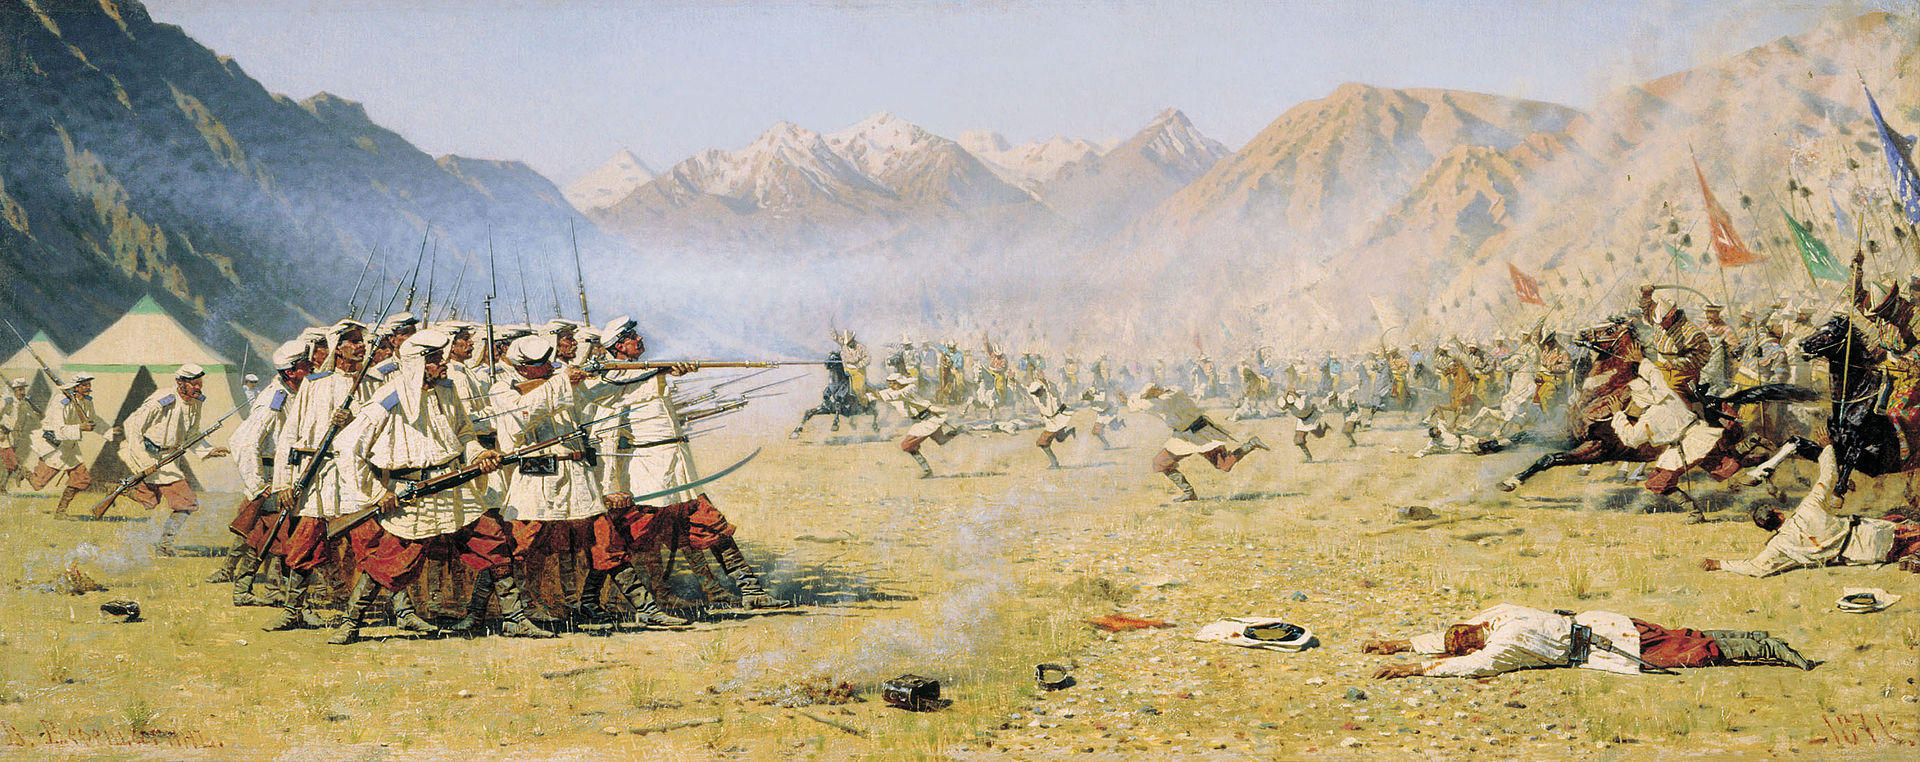 'Surprise Attack' by Vasily Vereschagin (1871)